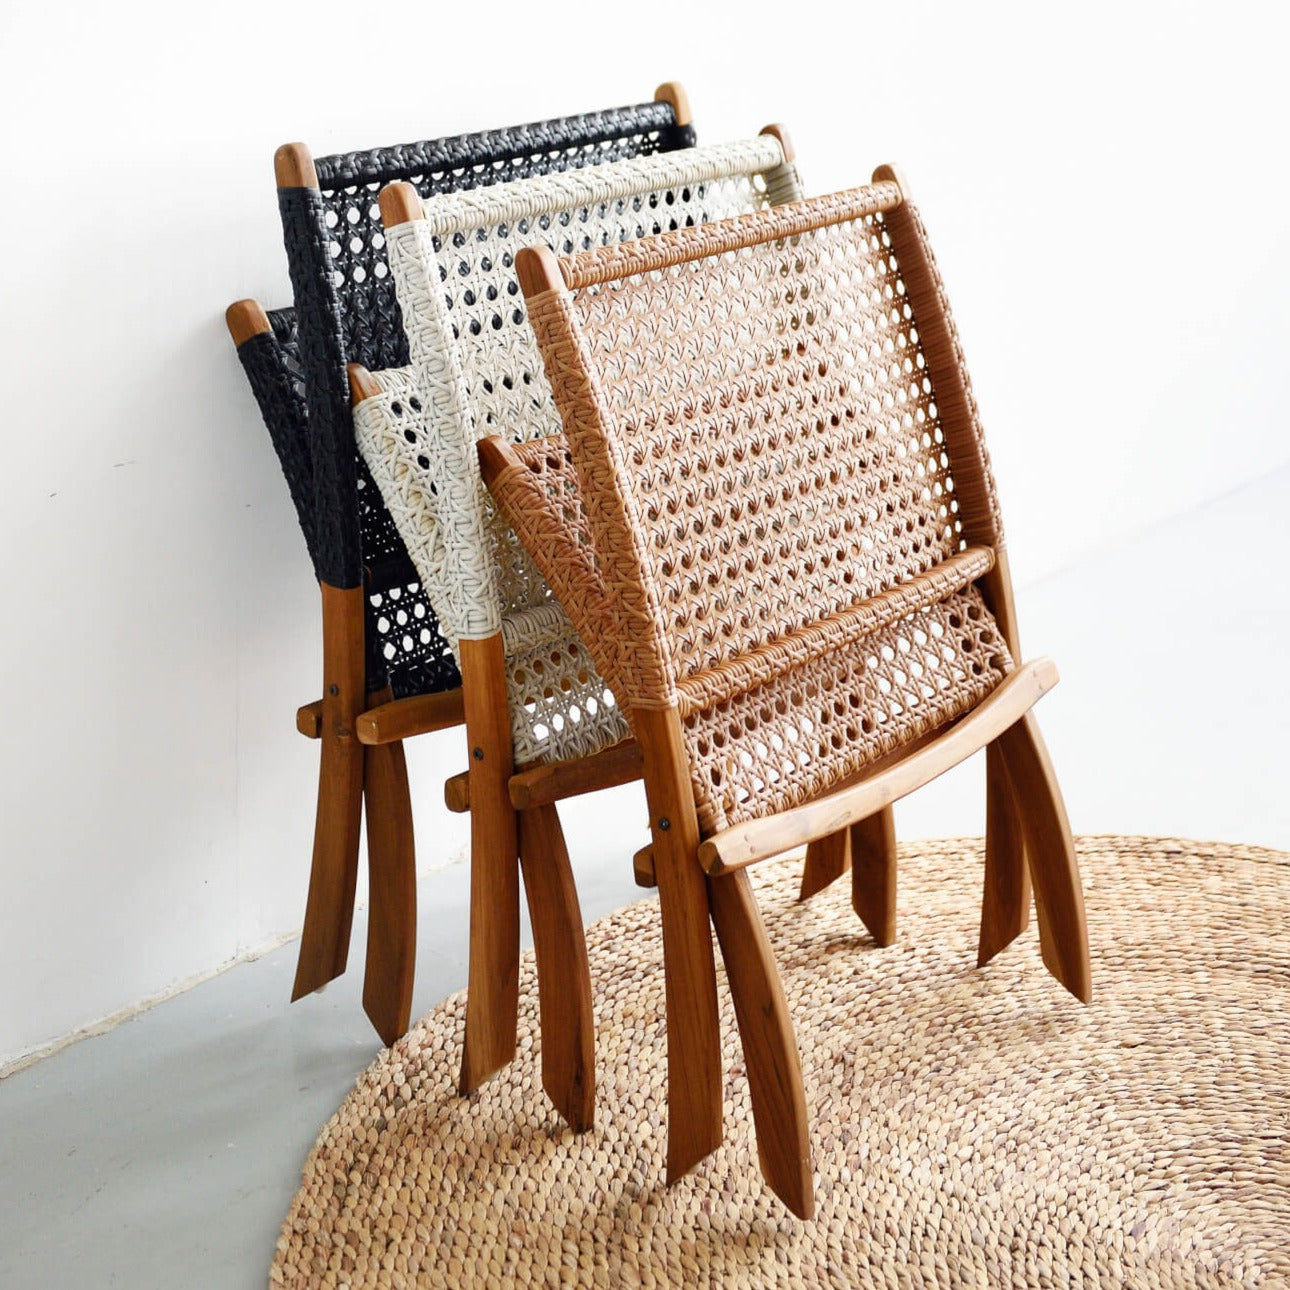 Venezuela Folding Chair - Noir - Furniture